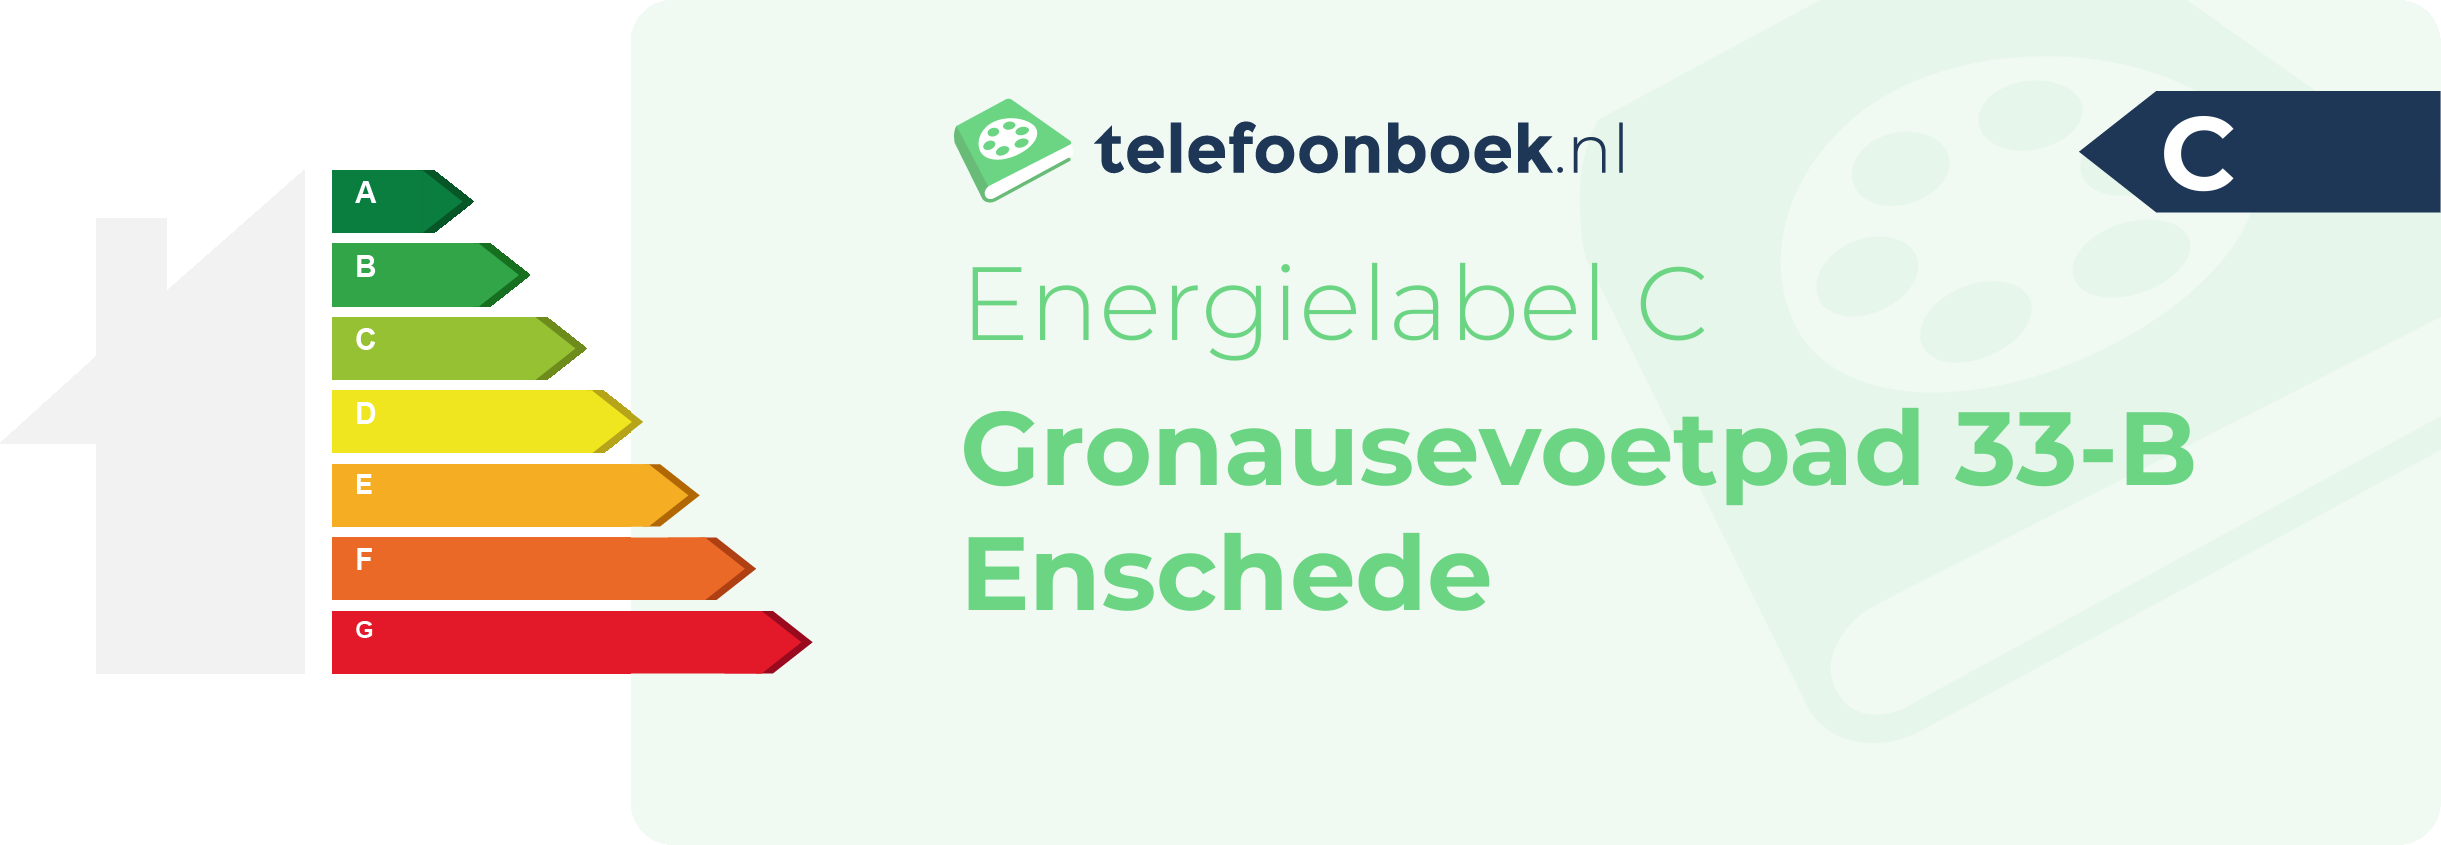 Energielabel Gronausevoetpad 33-B Enschede